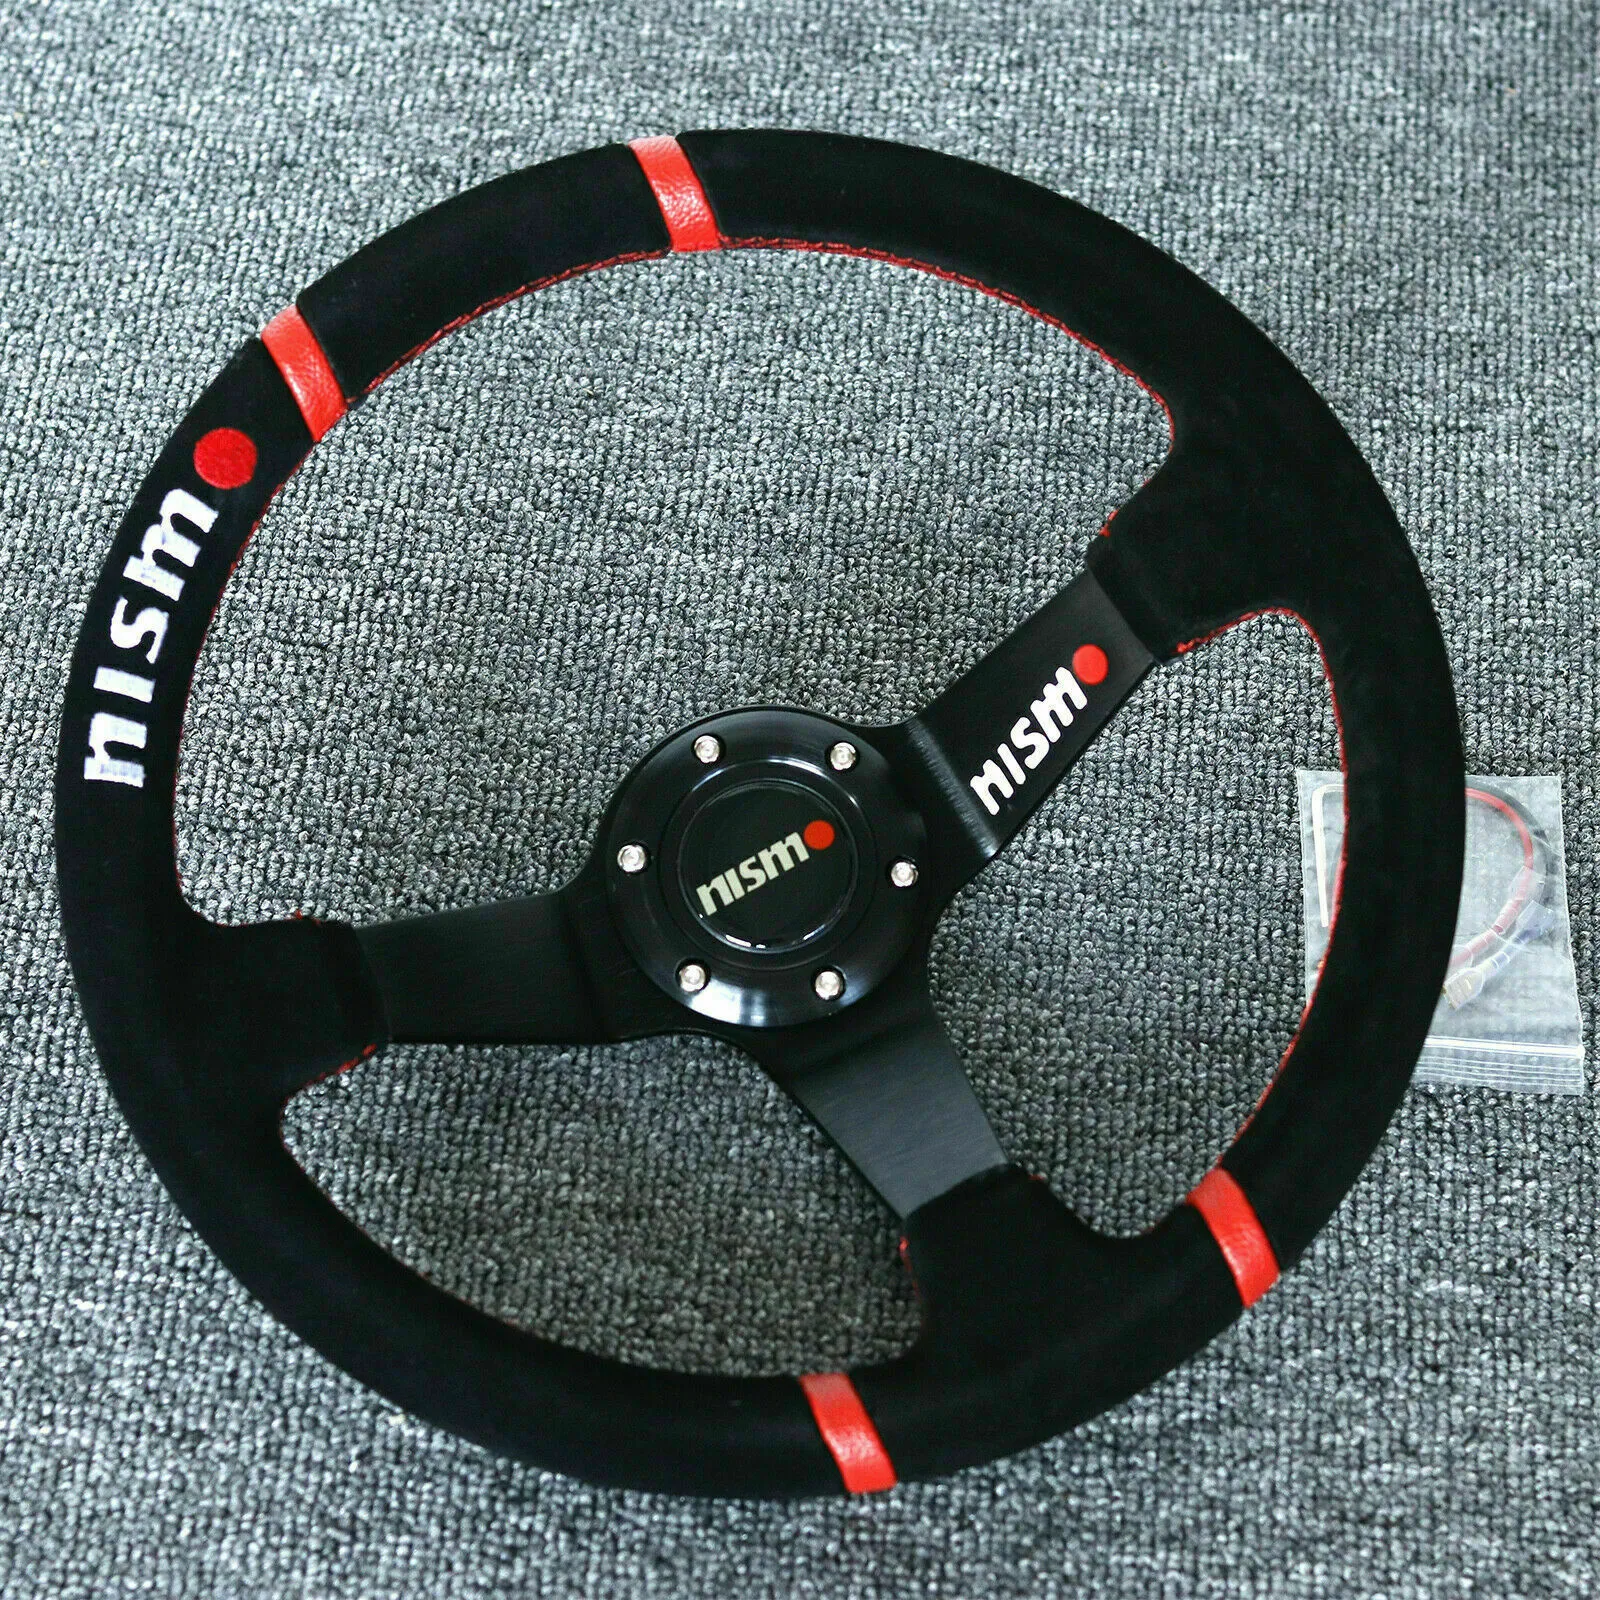 14"Universal Nismo Racing Red Ring Suede Leather Deep Dish Steering Wheel